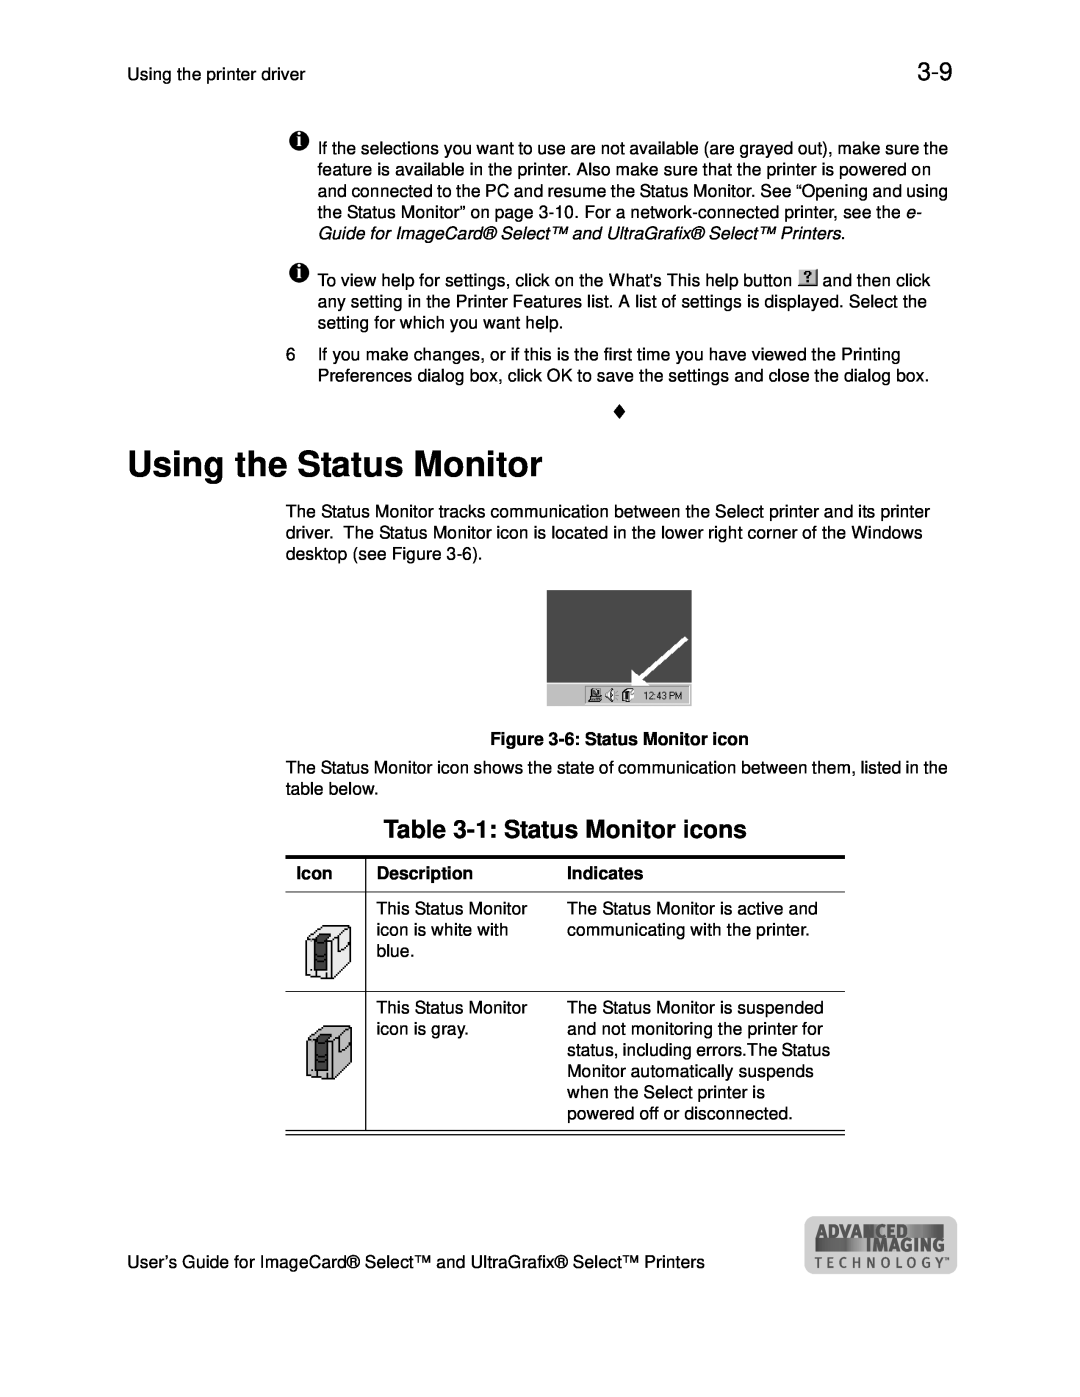 Datacard Group ImageCard SelectTM and UltraGrafix SelectTM Printers Using the Status Monitor, 1 Status Monitor icons, Icon 